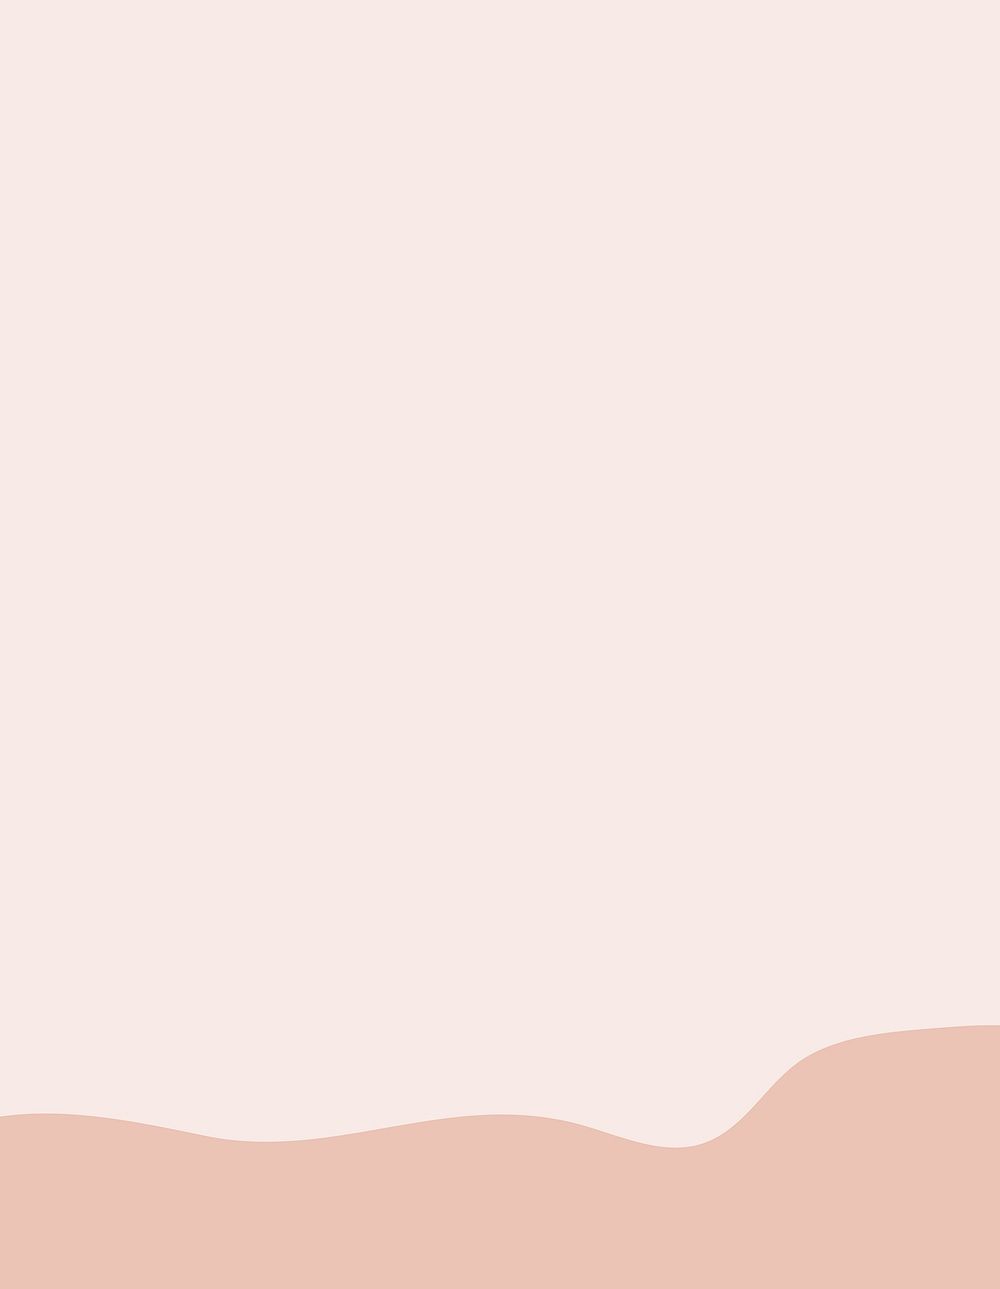 Pastel pink background, aesthetic border design